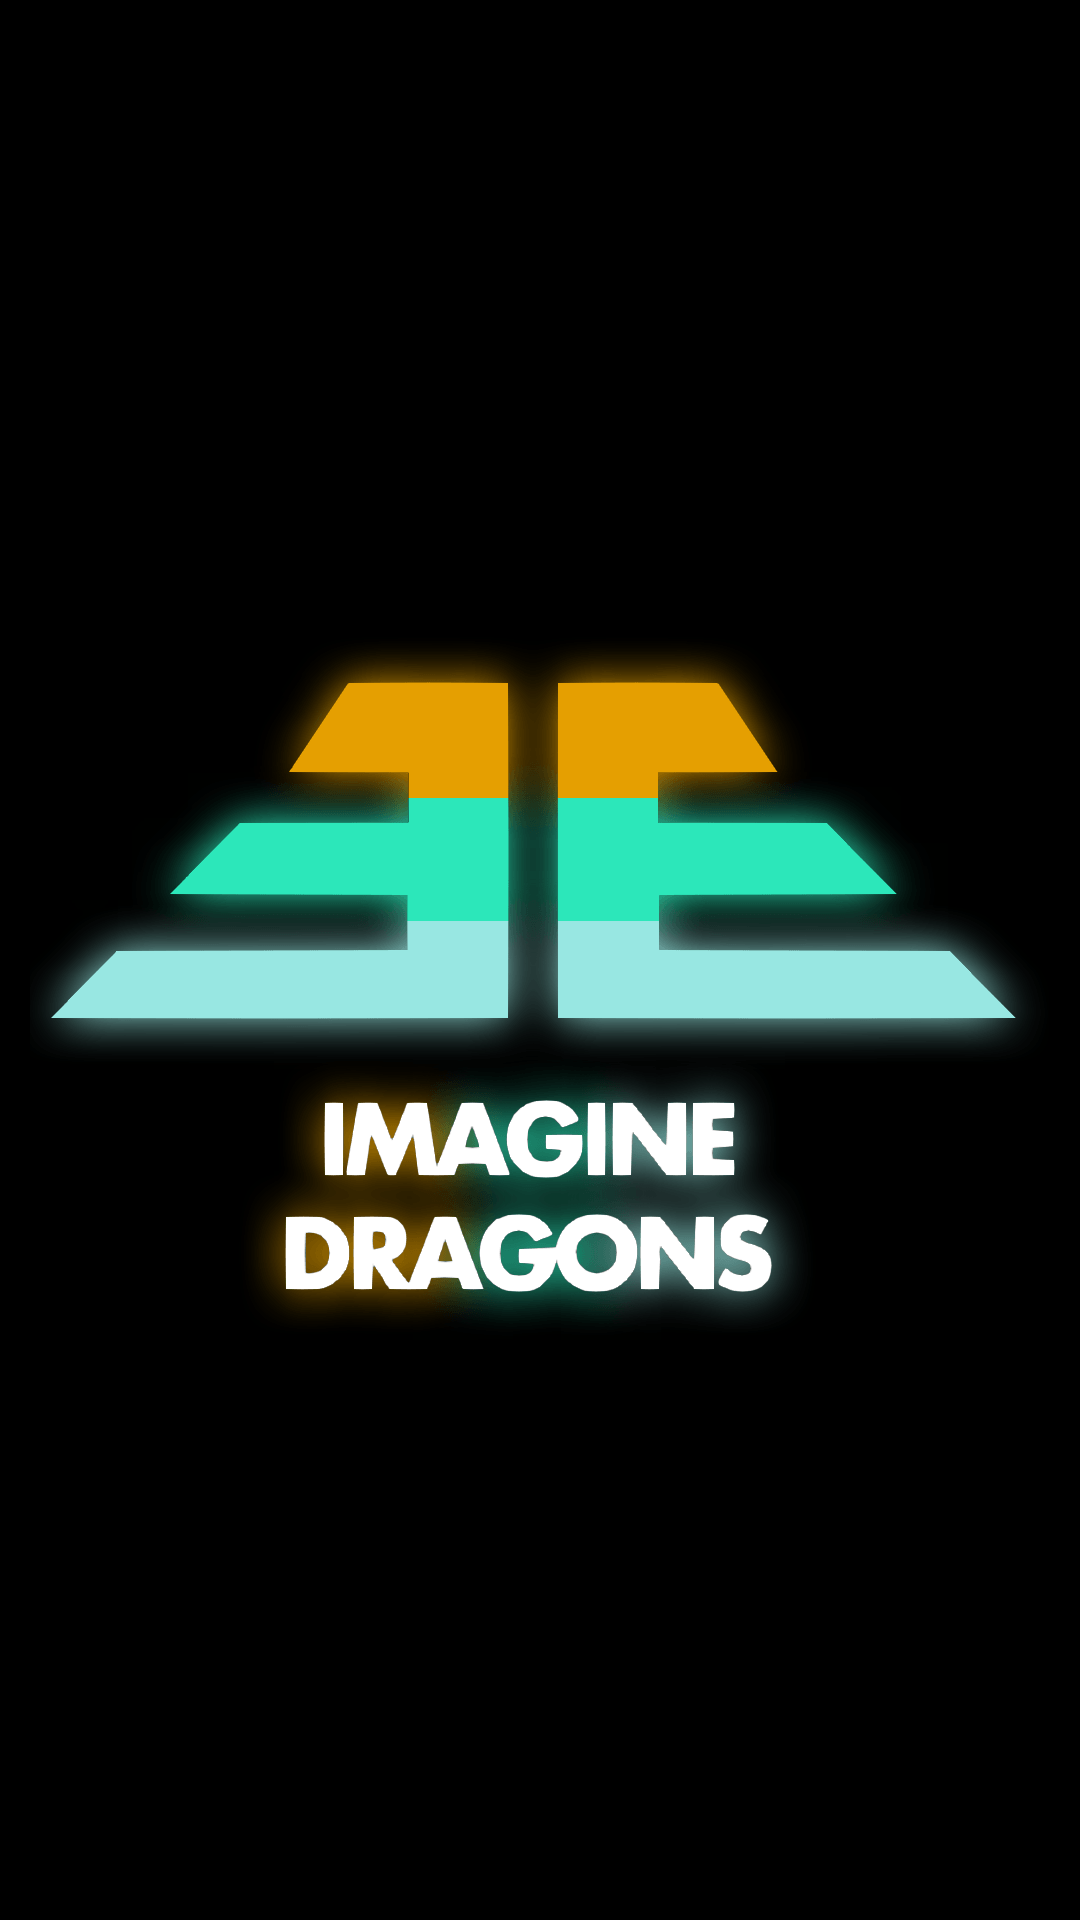 Imagine Dragons Logo Wallpapers Top Free Imagine Dragons Logo Backgrounds Wallpaperaccess